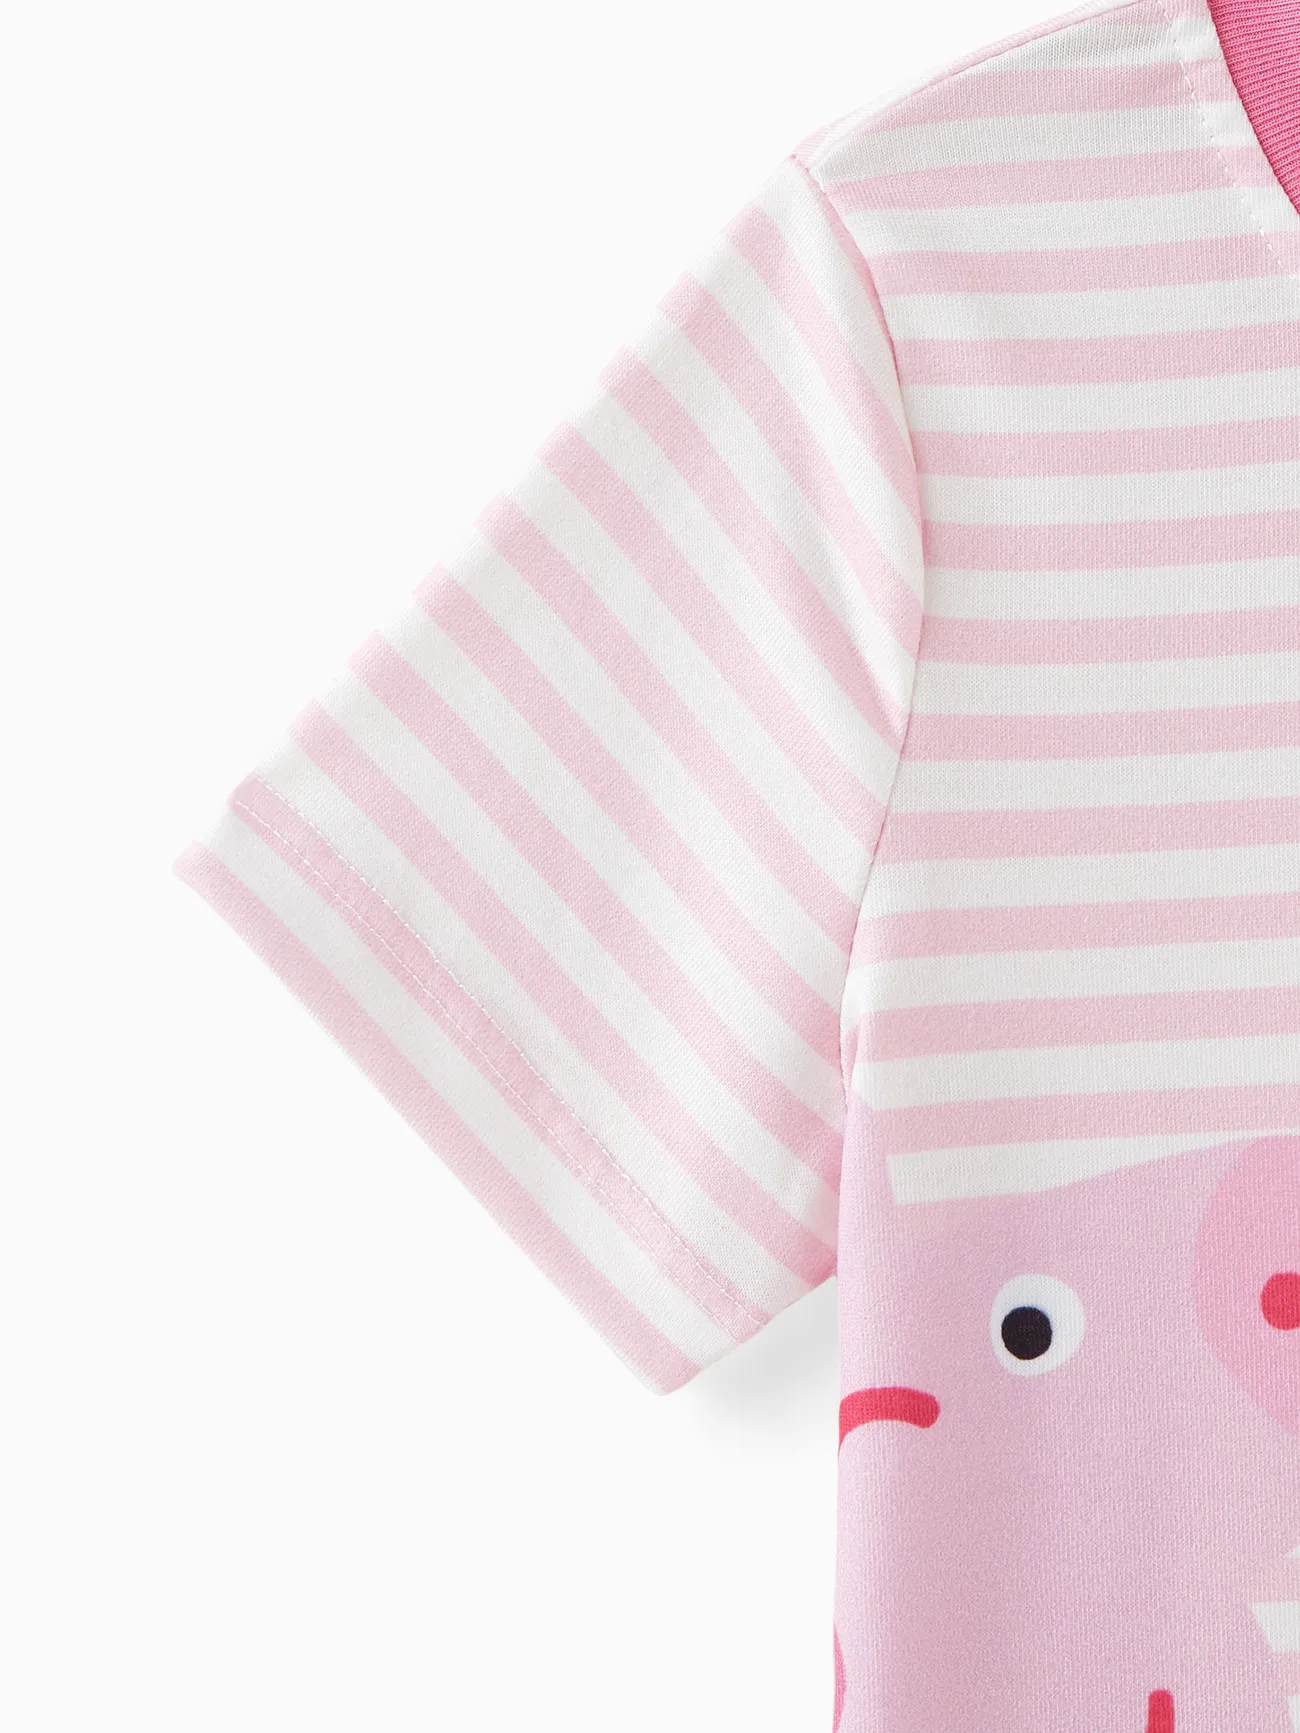 Peppa Pig Kleinkinder Unisex Kindlich Kurzärmelig T-Shirts rosa big image 1